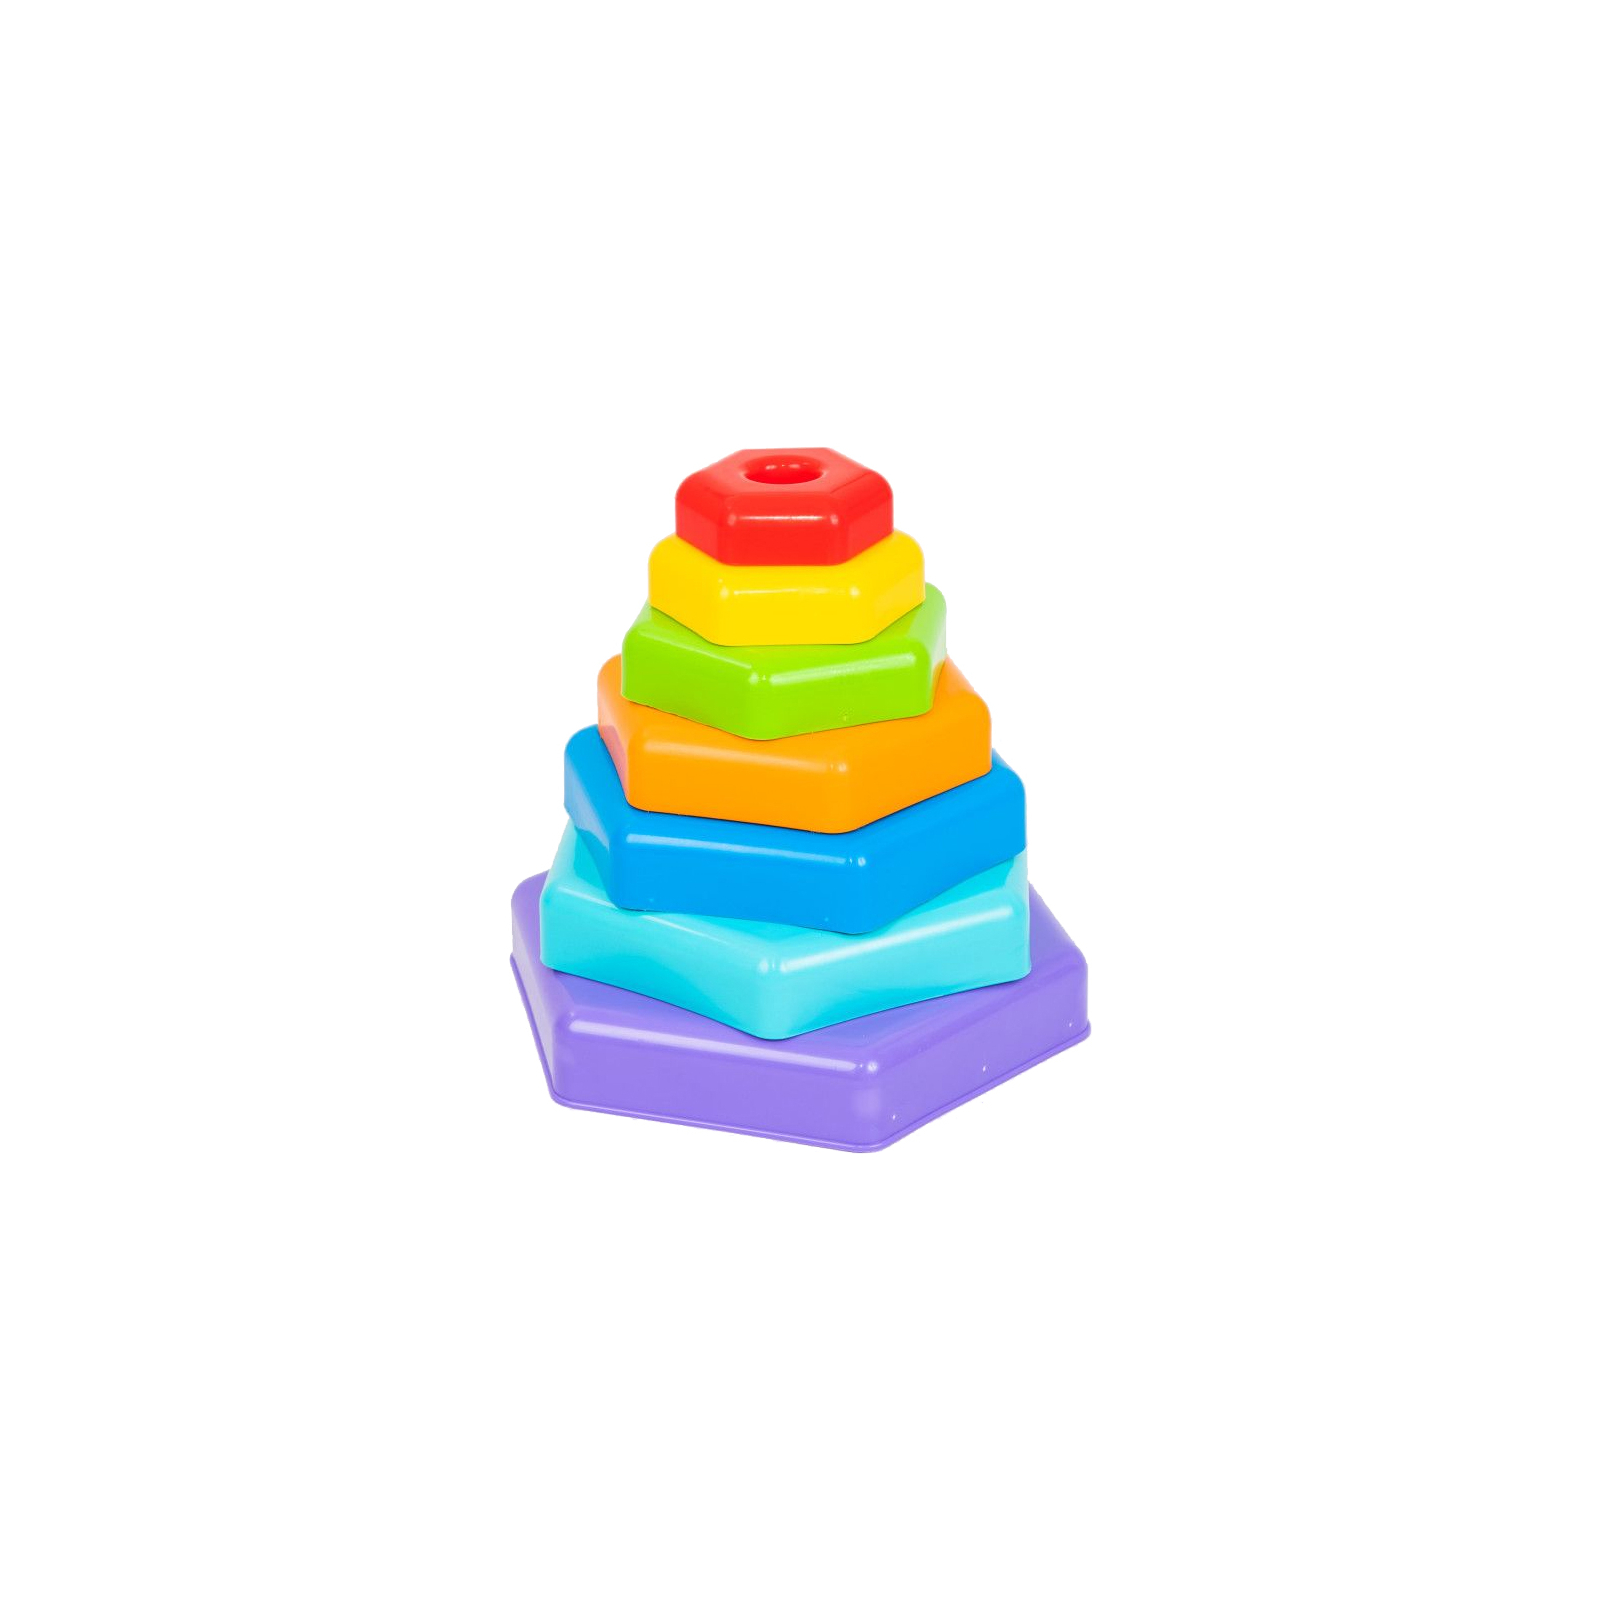 Развивающая игрушка Tigres Пирамидка-радуга в коробке (39363)